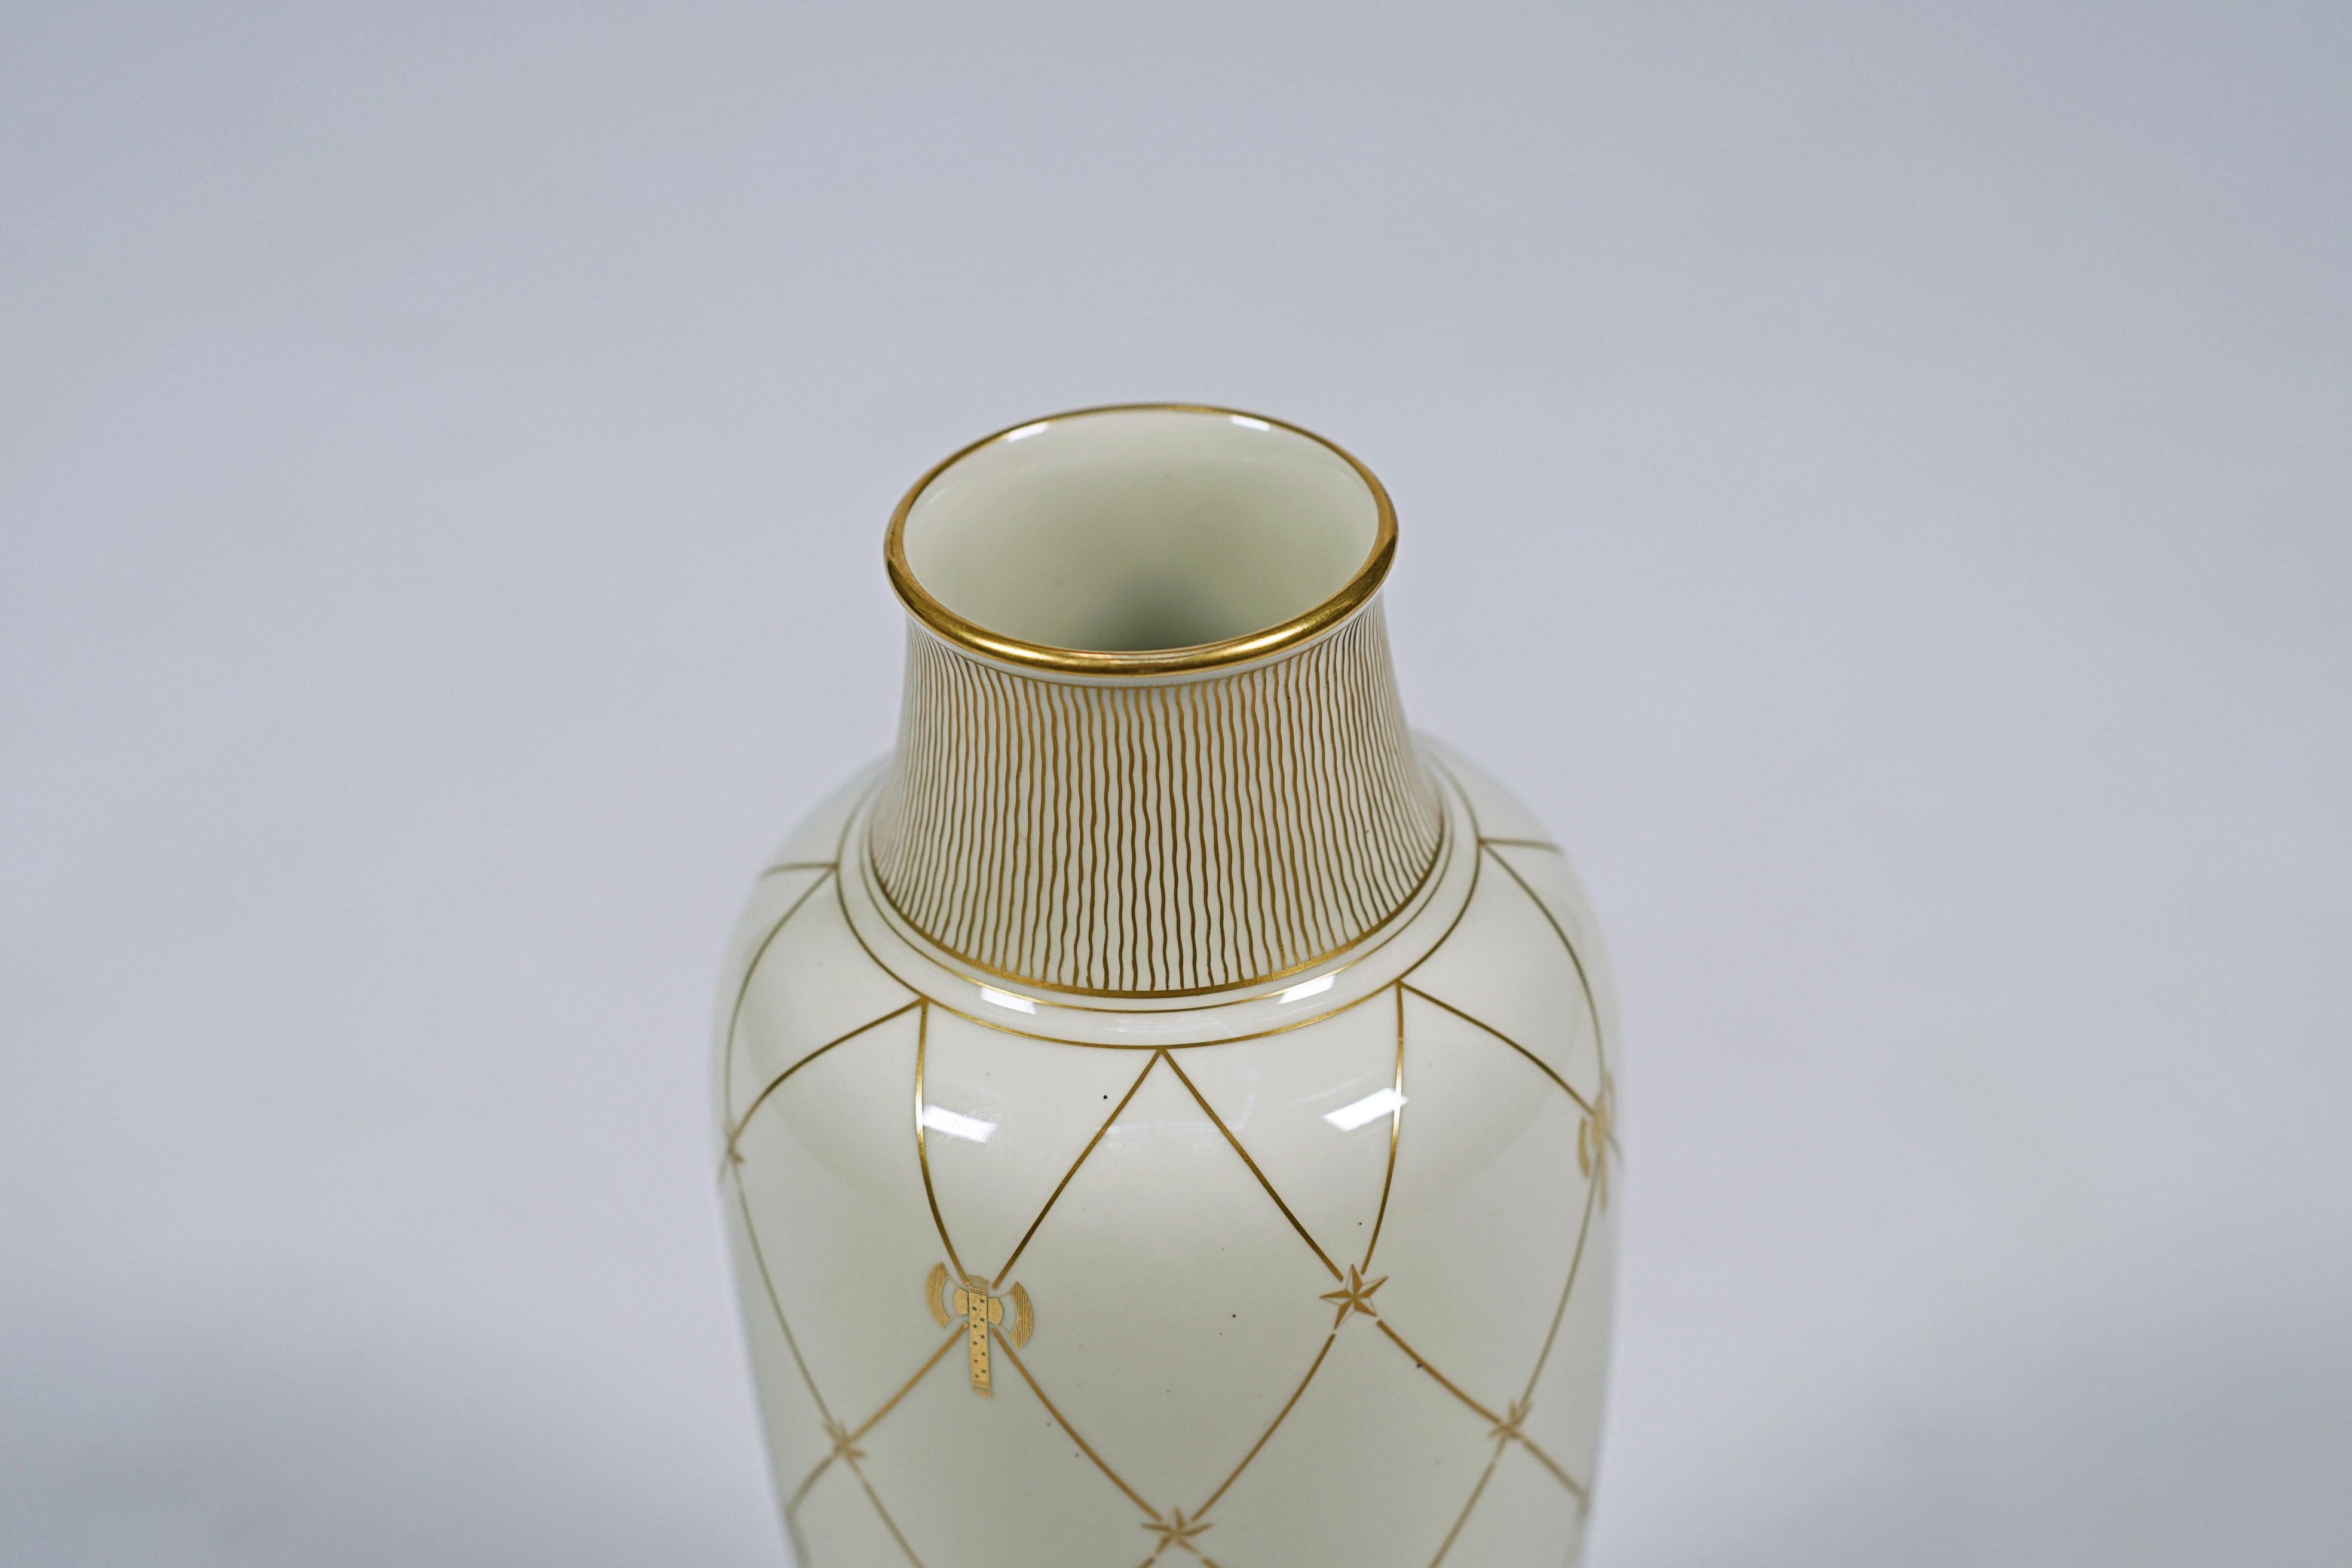 Art Deco porcelain vase manufactured by Sèvres. The vase shows an 